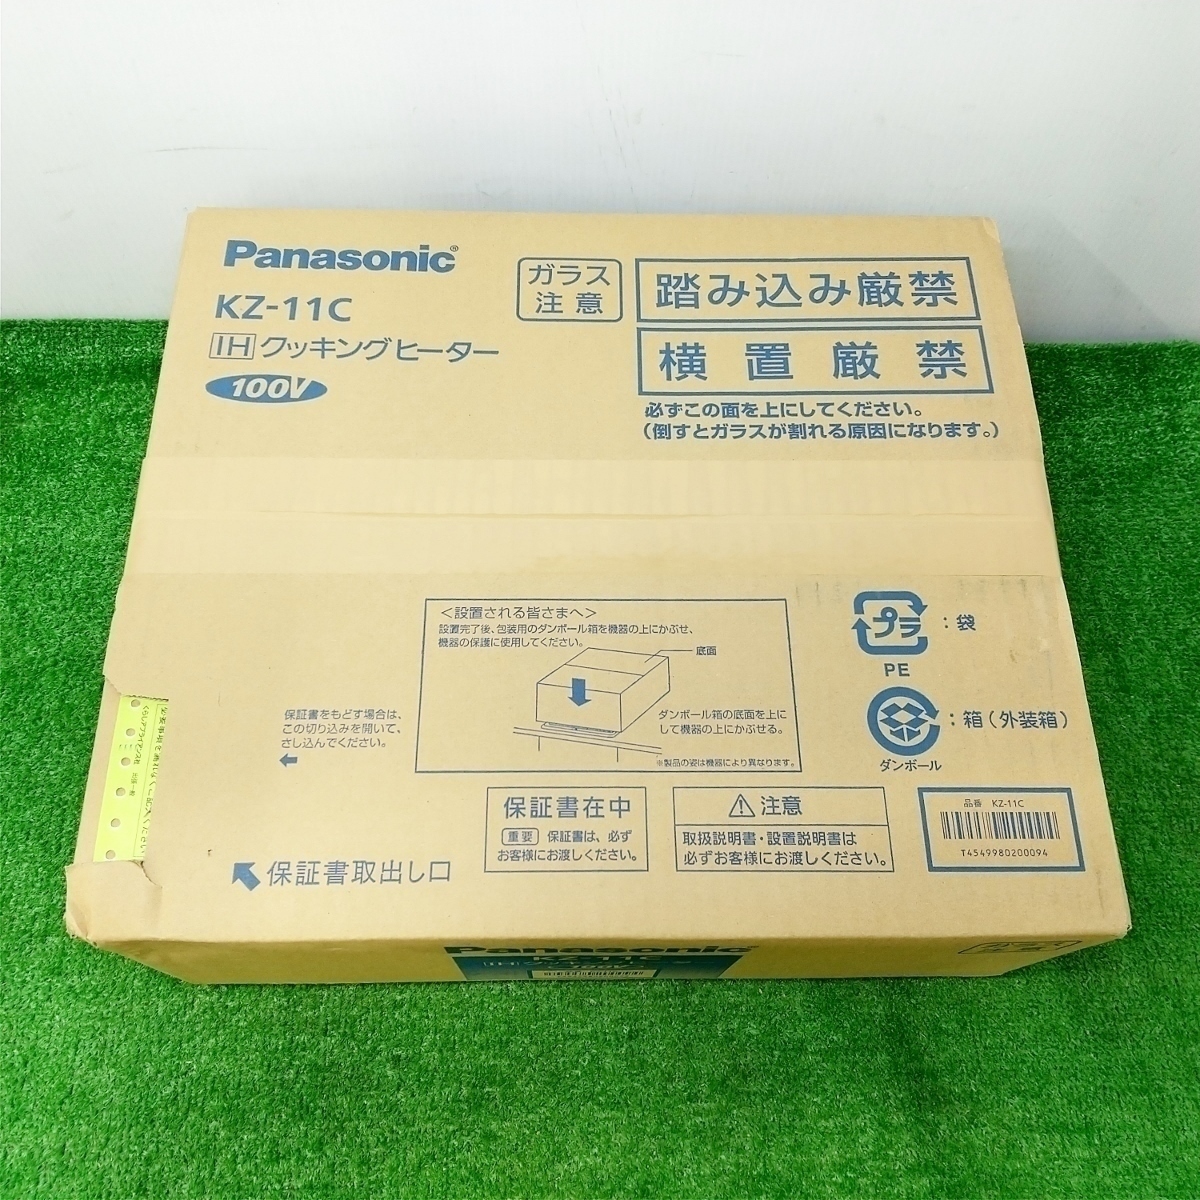  unused unopened Panasonic Panasonic 1. built-in IH cooking heater portable cooking stove 100V KZ-11C ②